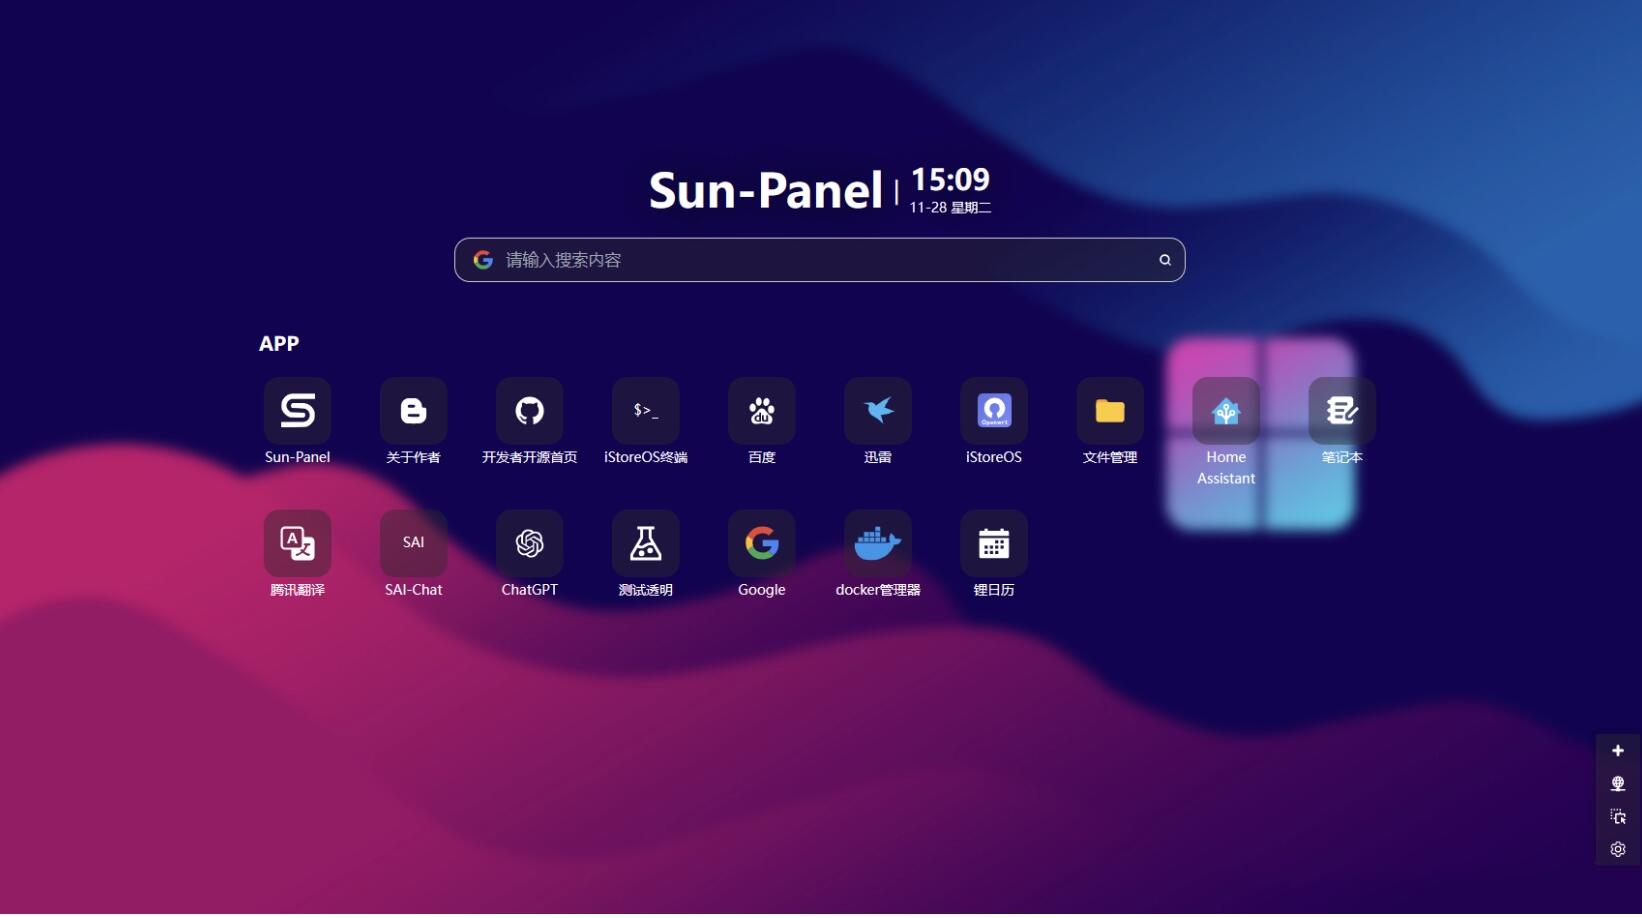 Sun-Panel